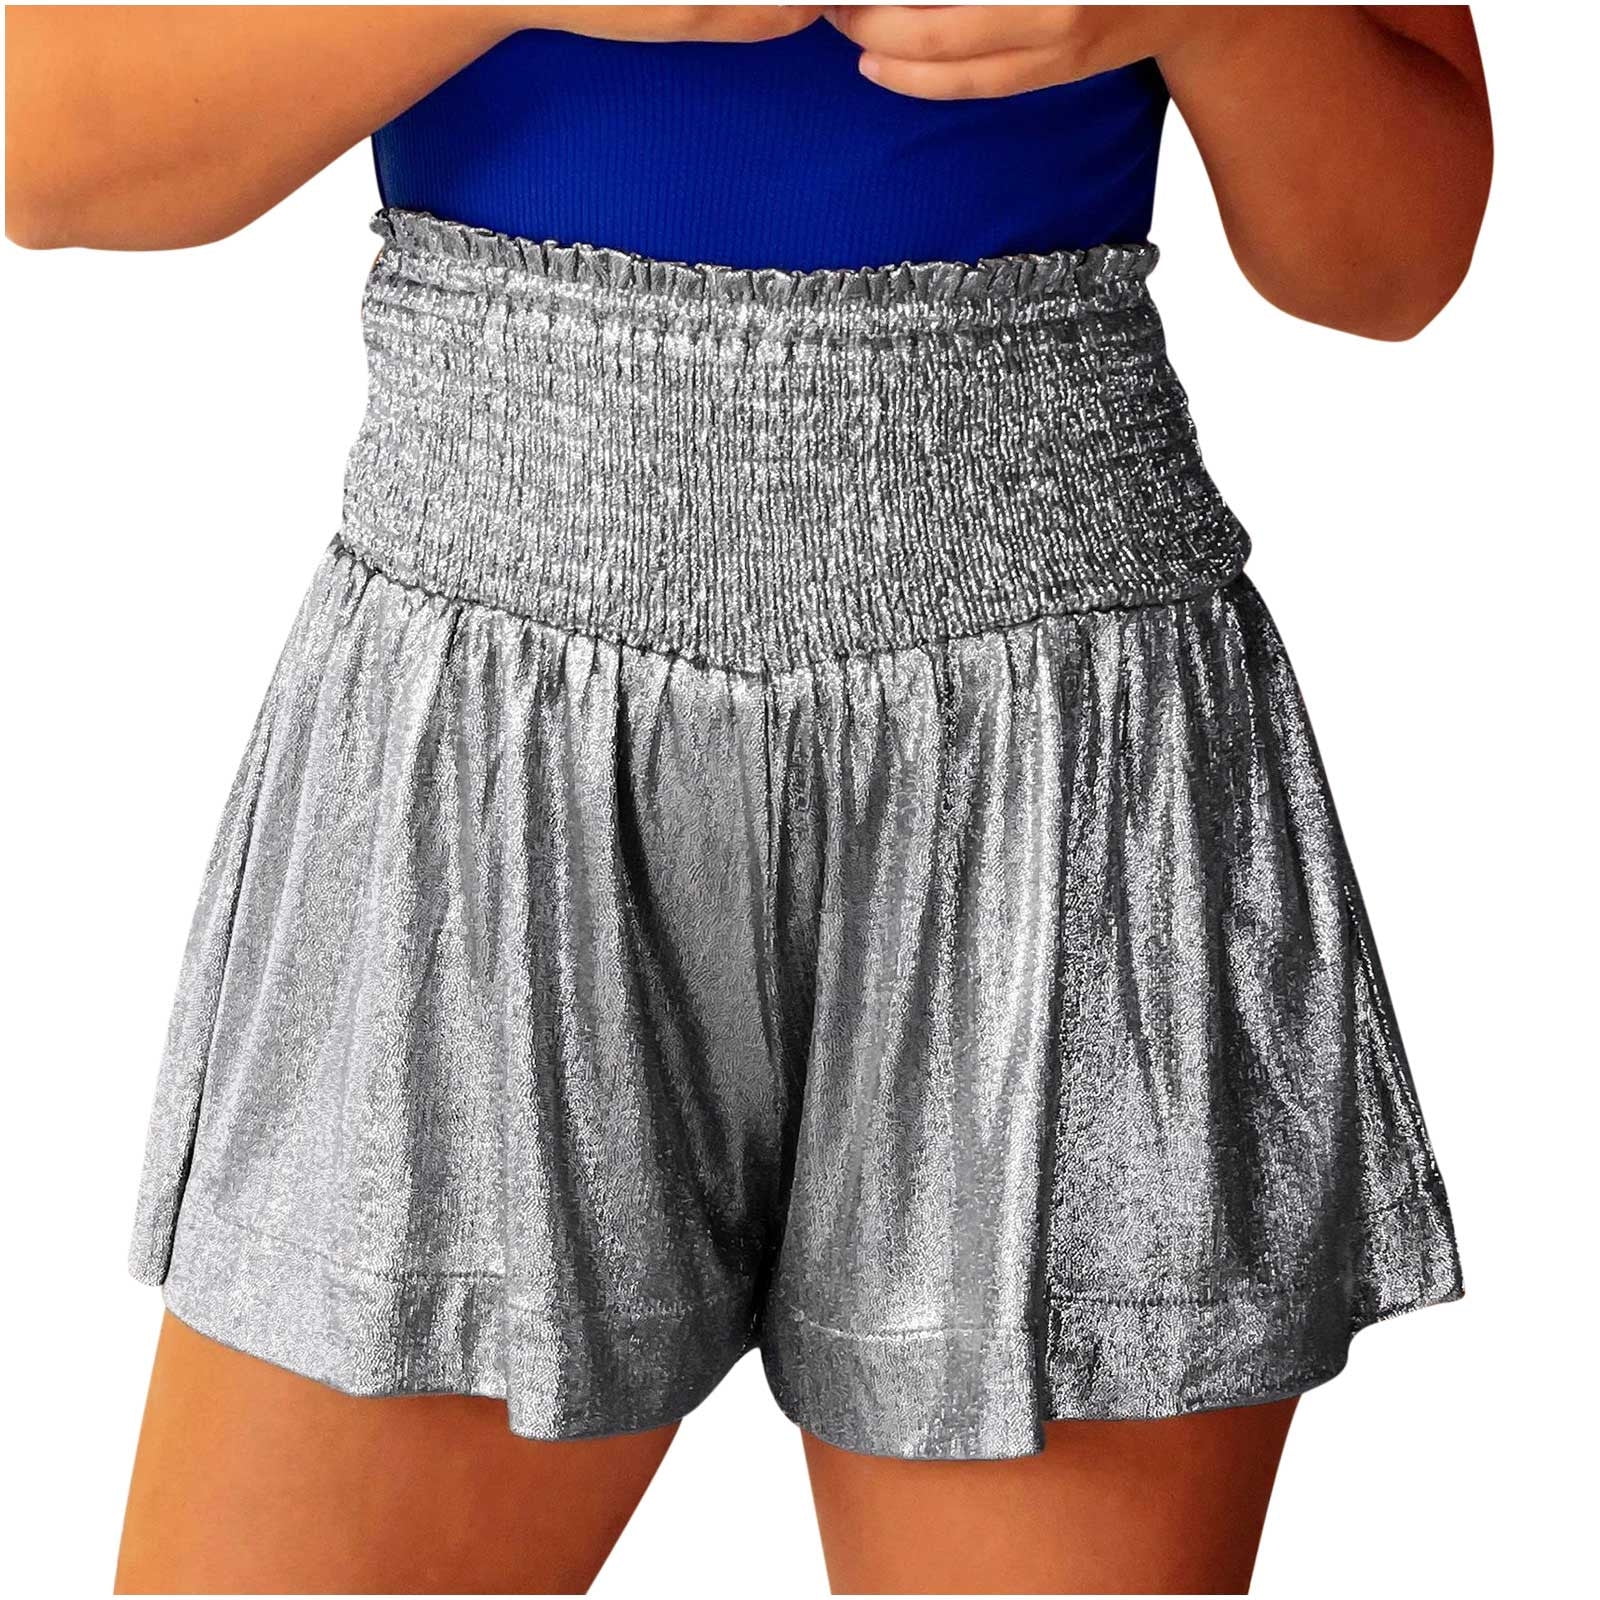 Proportional økse Eksperiment Plus Size Shorts for Women High Smocked Waisted Belly Control Ruffle Hem  Beach Boho Shorts Summer Solid Casual Wear - Walmart.com